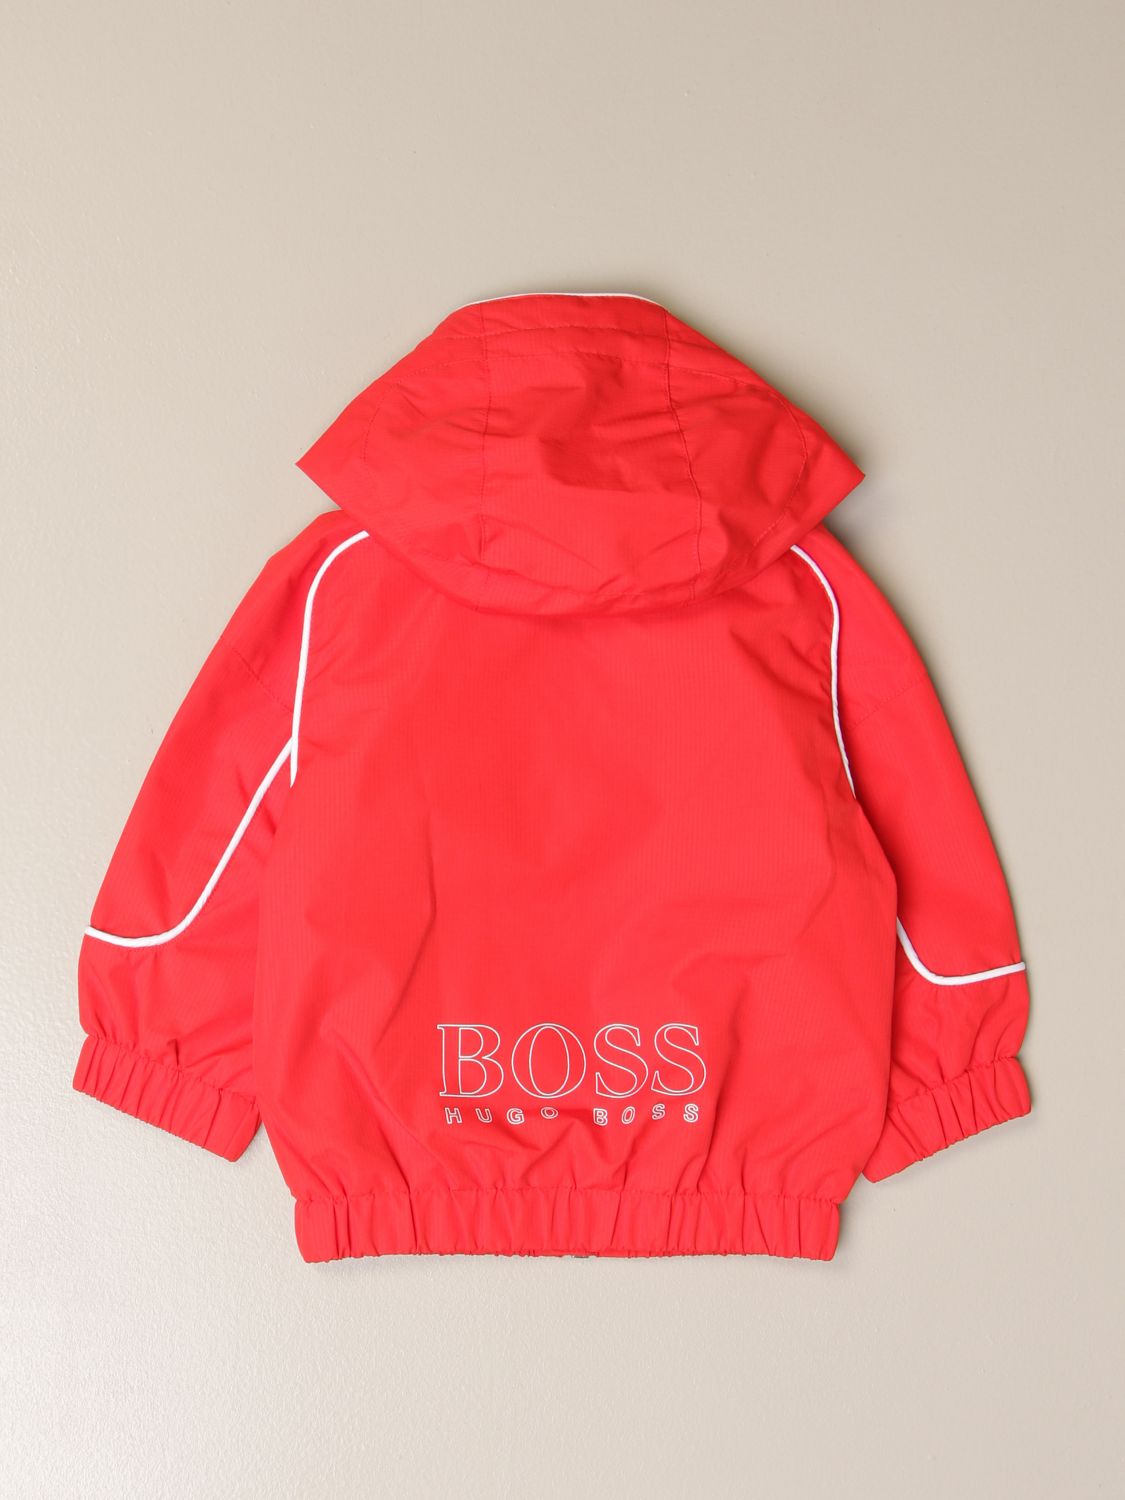 boss sports jacket